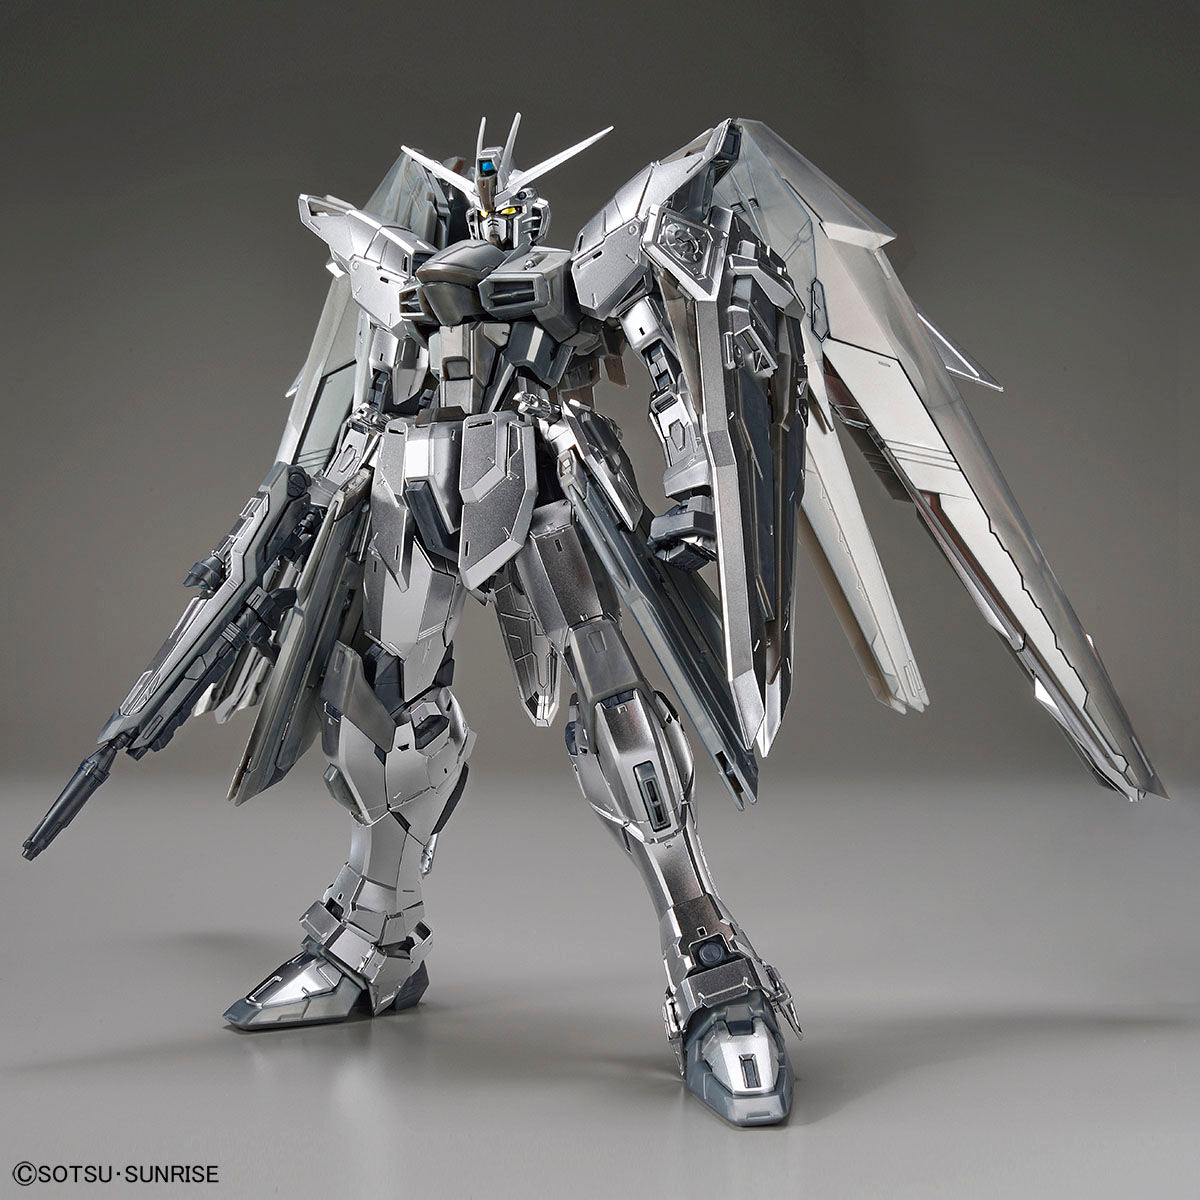 MG 1/100 Gundam Base Limited Freedom Gundam Ver.2.0 [Silver Coating] *PREORDER*